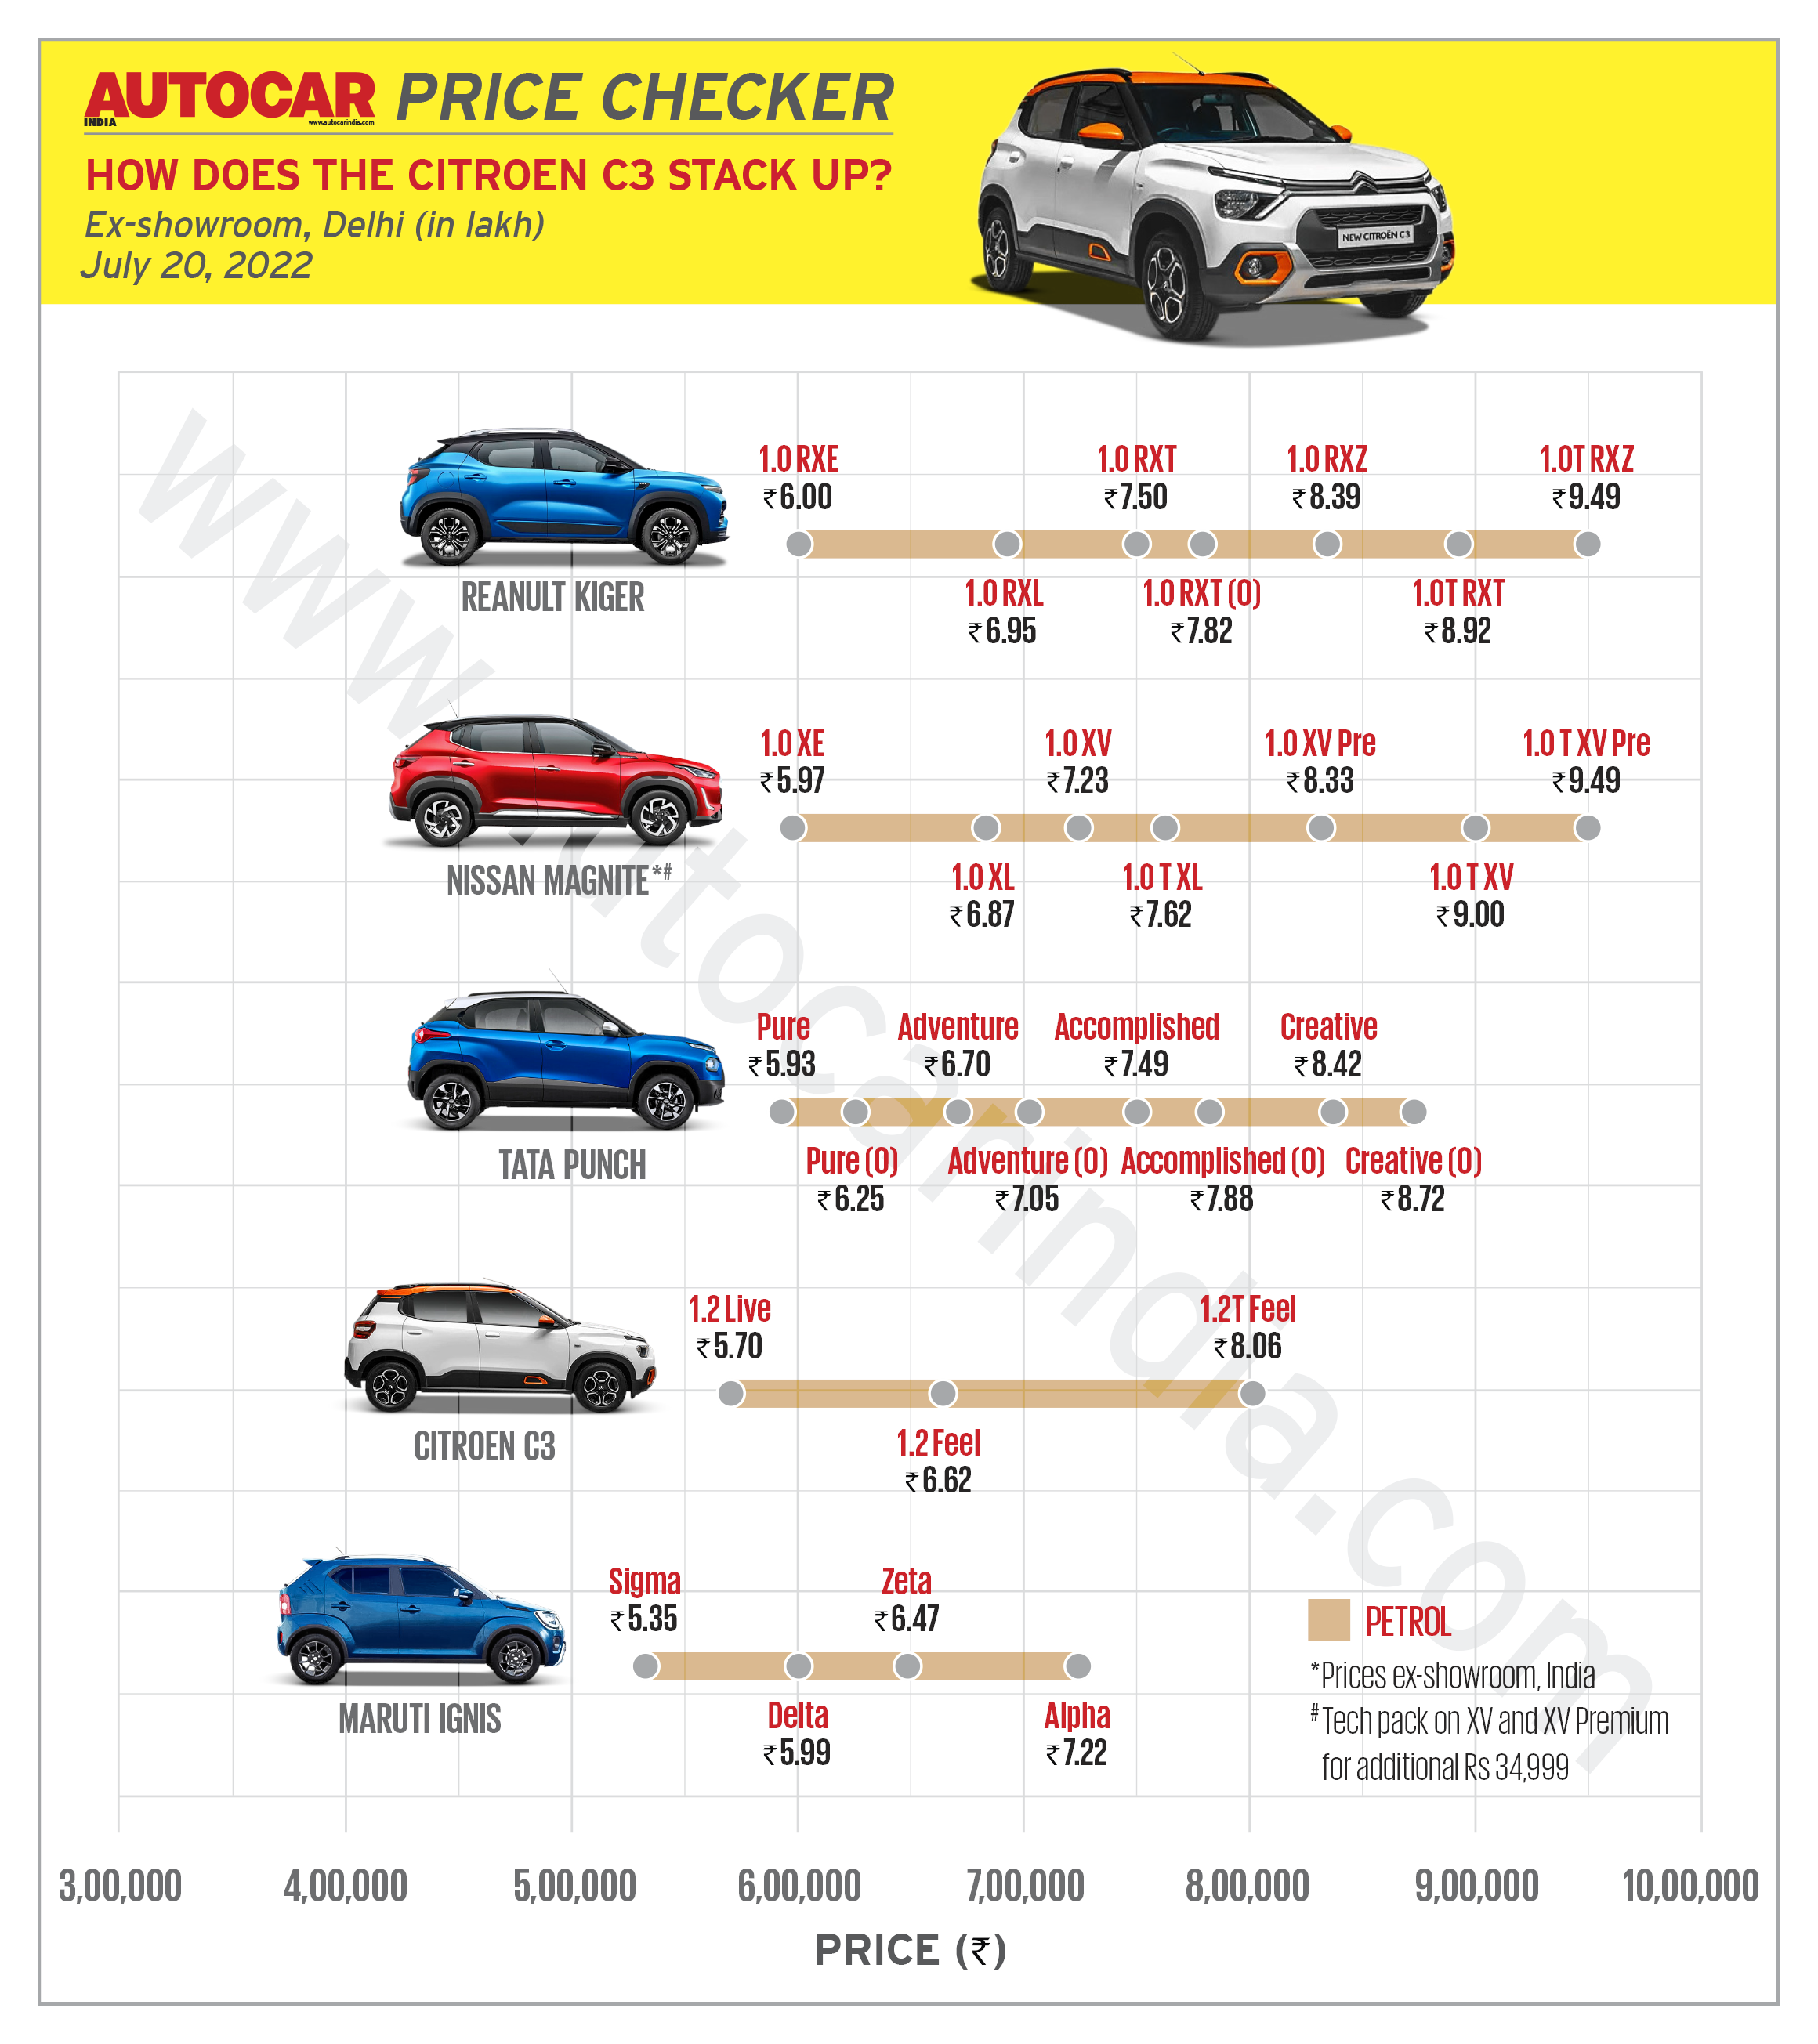 Citroen C3 priced at Rs Rs 5.71 lakh; features, powertrains, design details